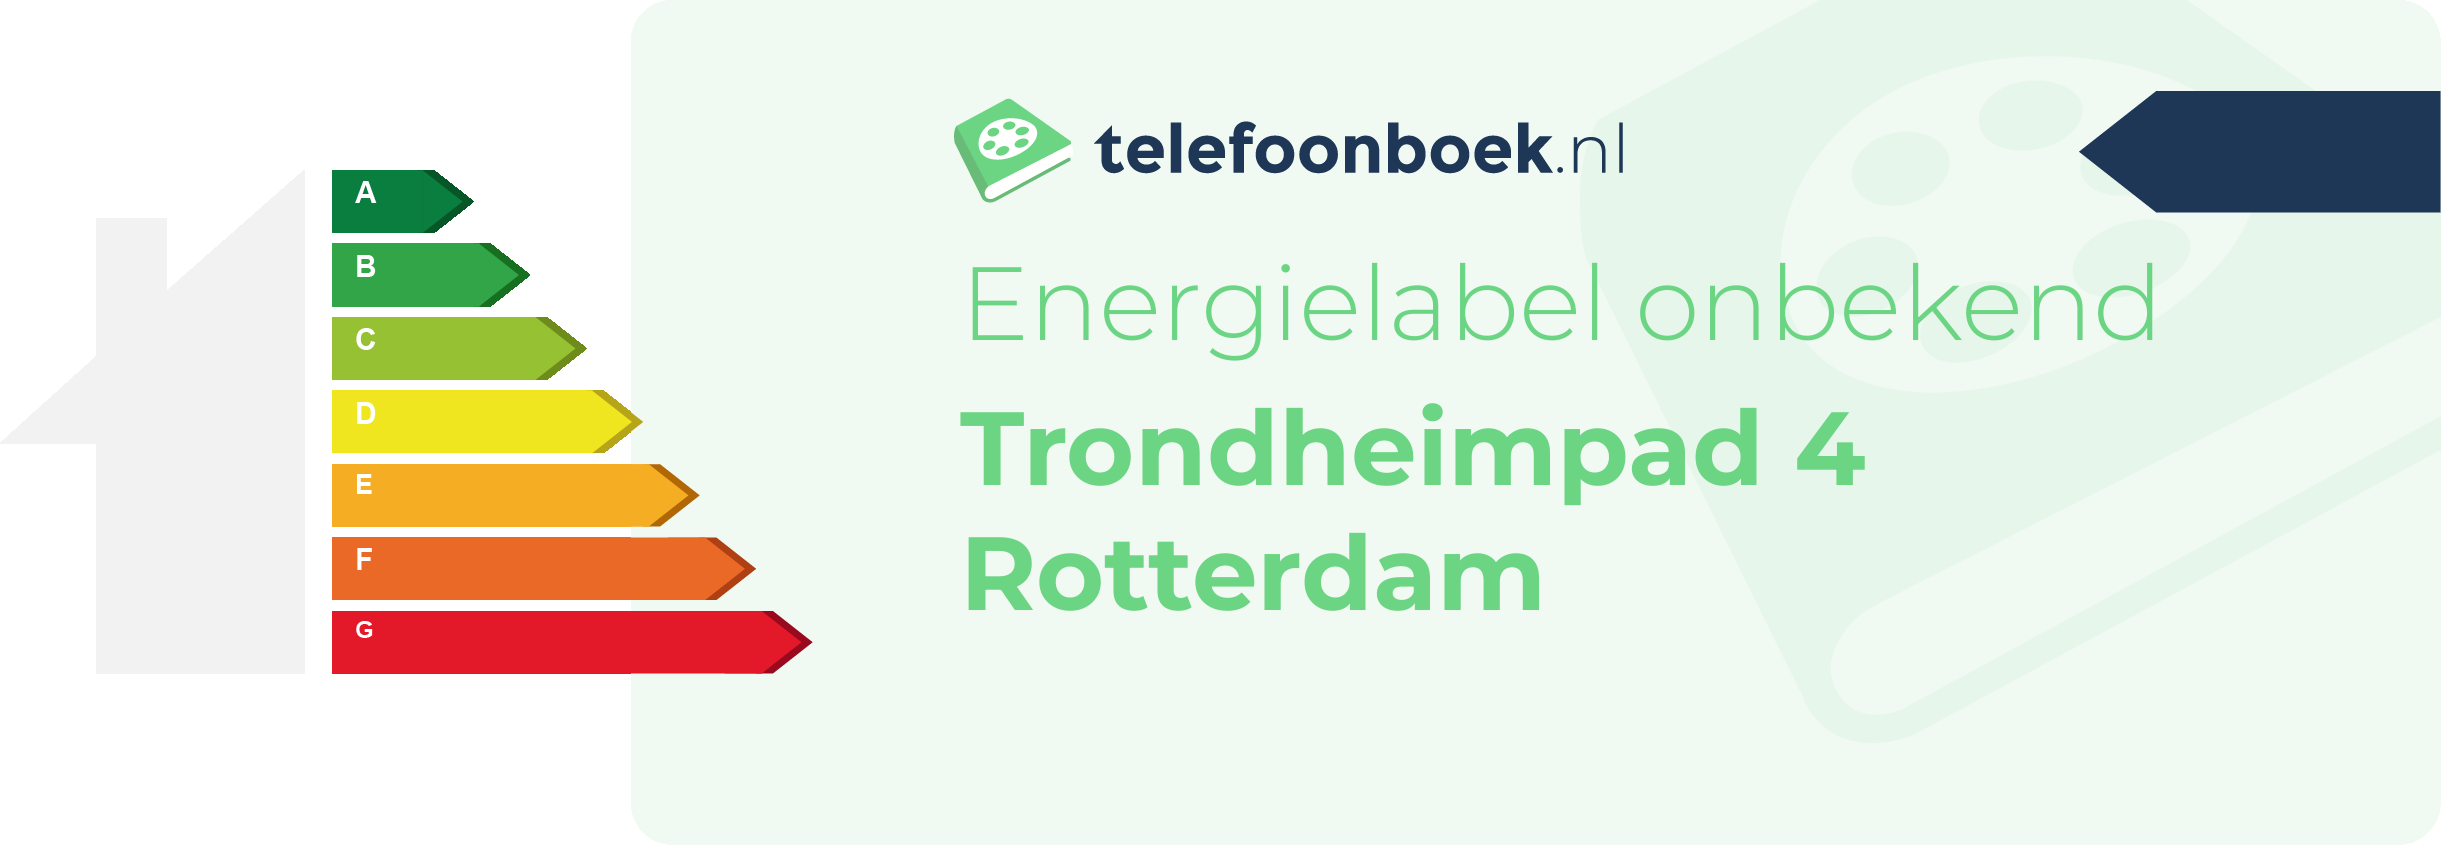 Energielabel Trondheimpad 4 Rotterdam